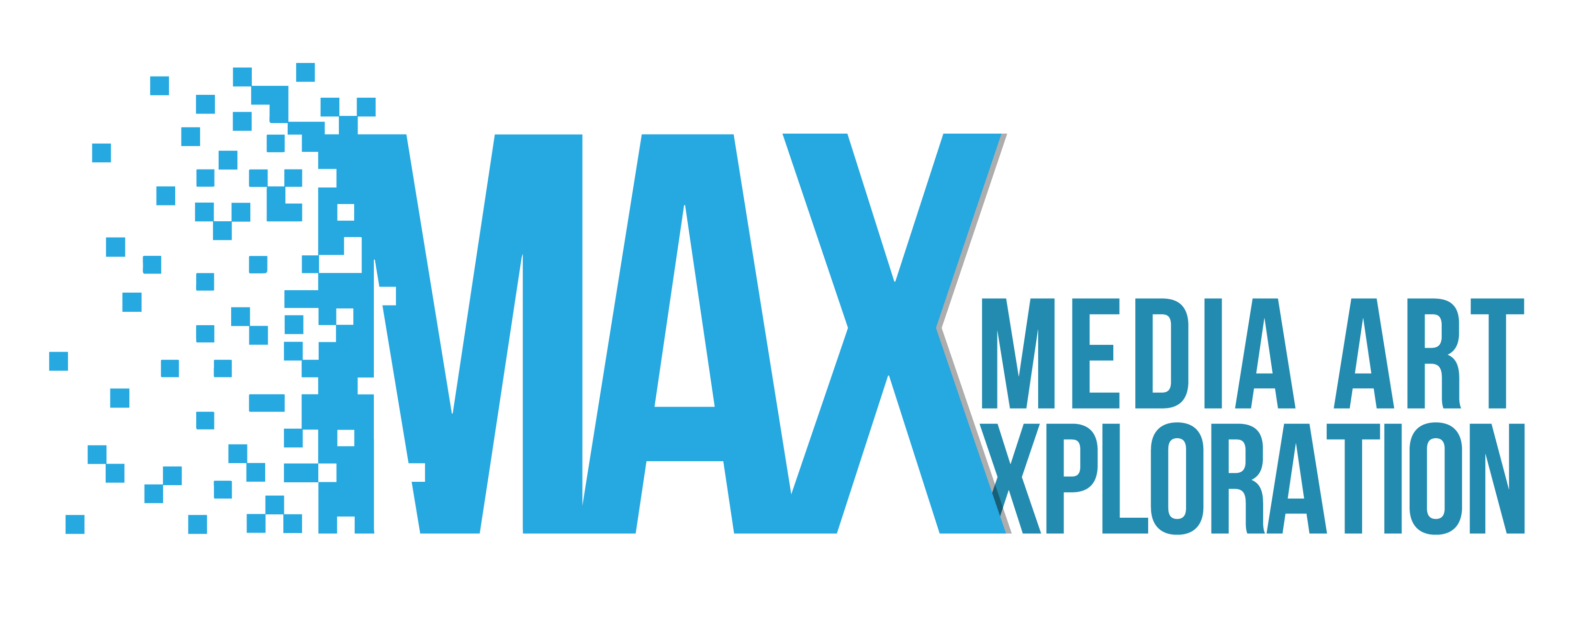 MMedia Art Xploration logo